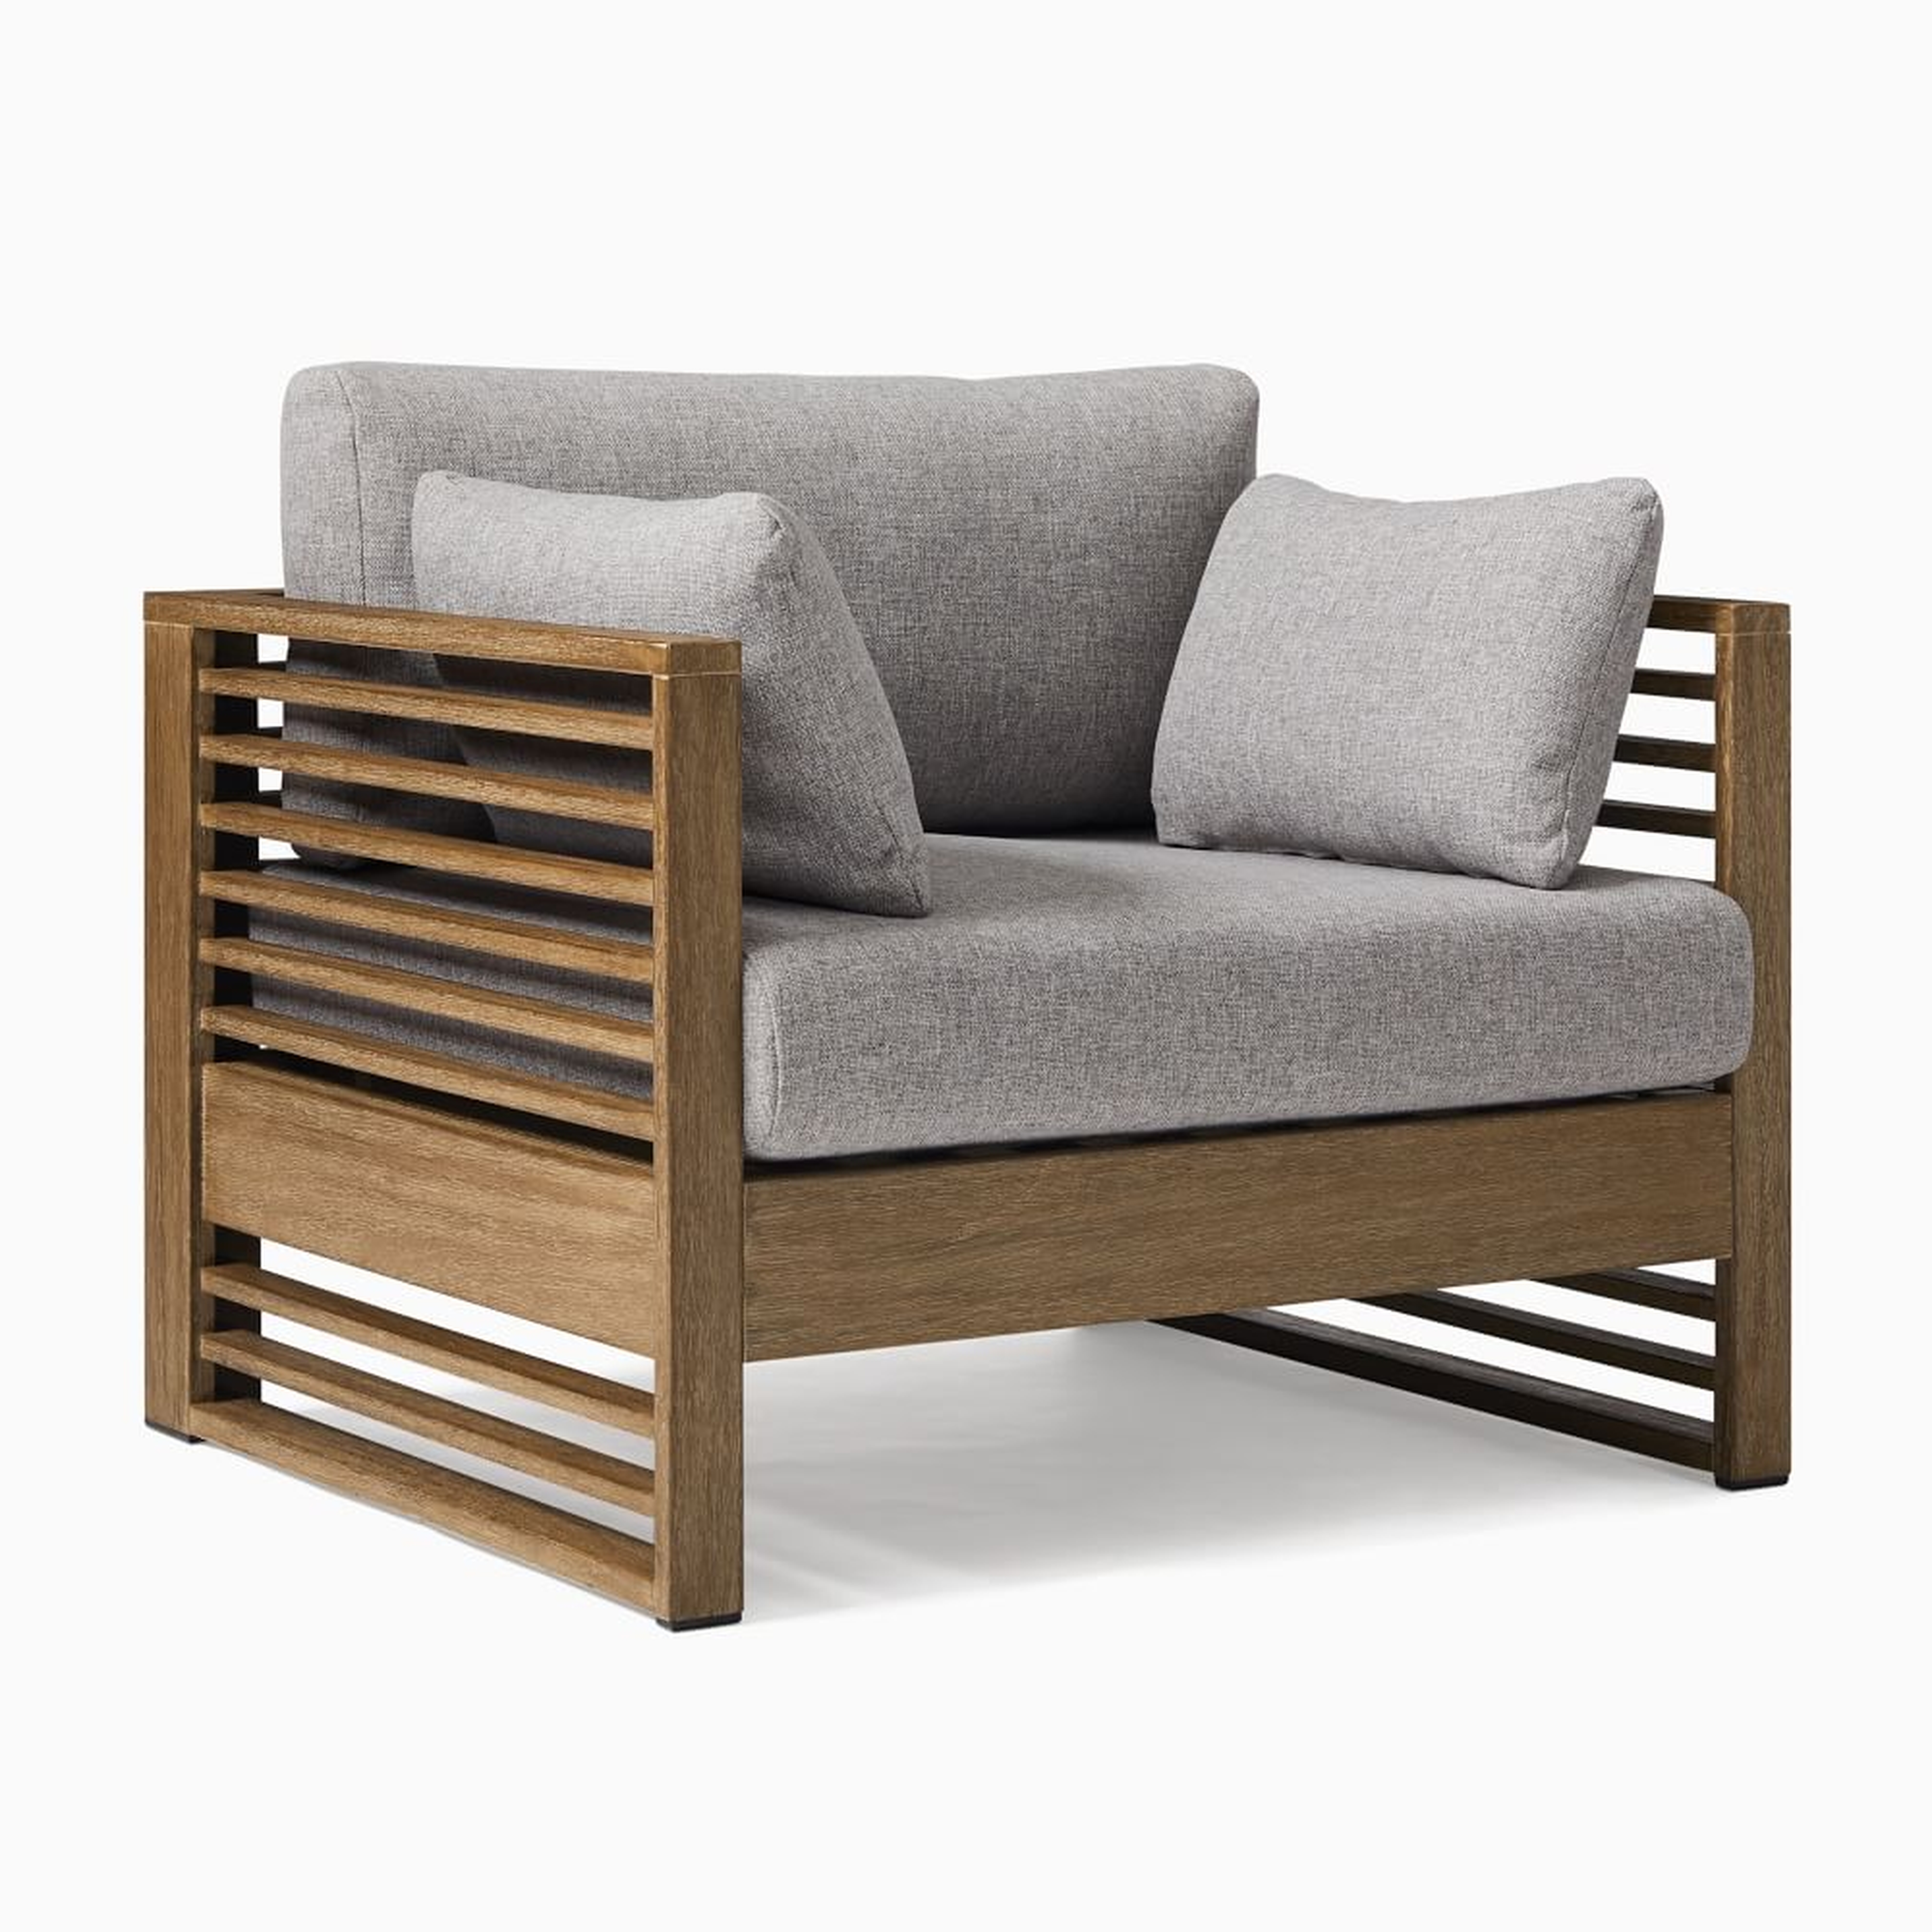 Santa Fe Slatted Lounge Chair, Driftwood/Gray - West Elm